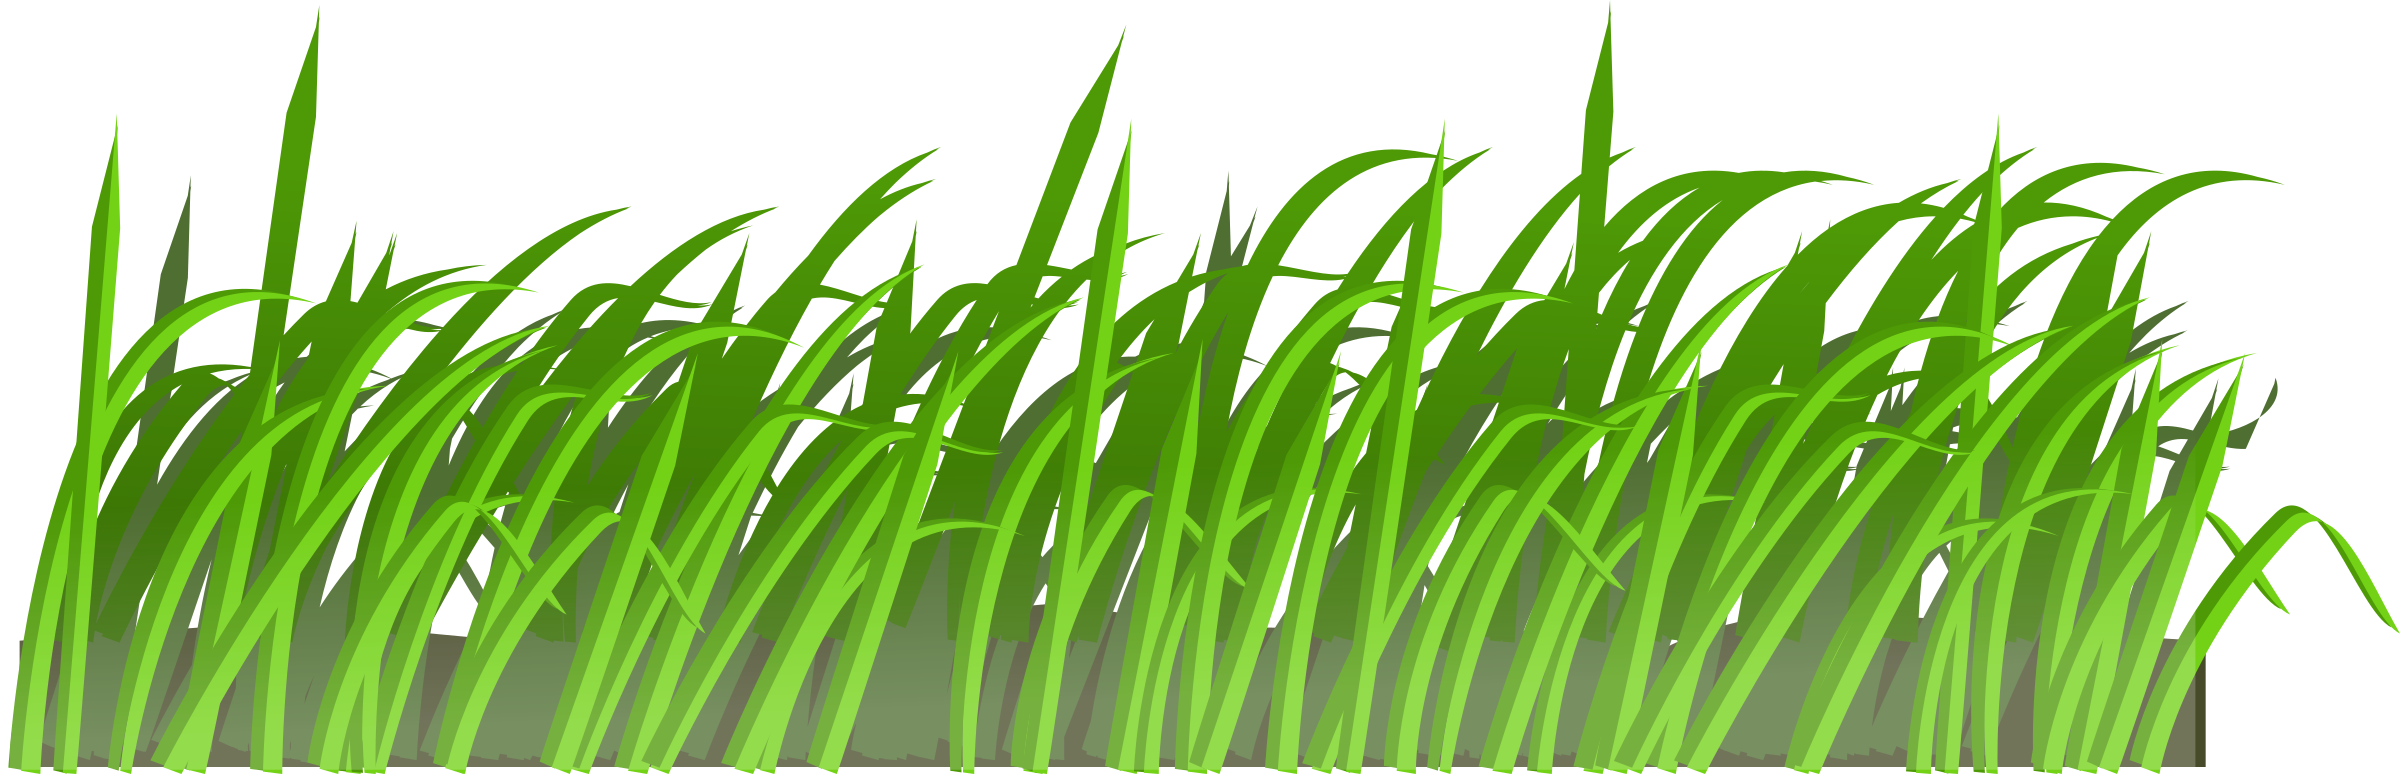 Grass texture SVG Clip arts